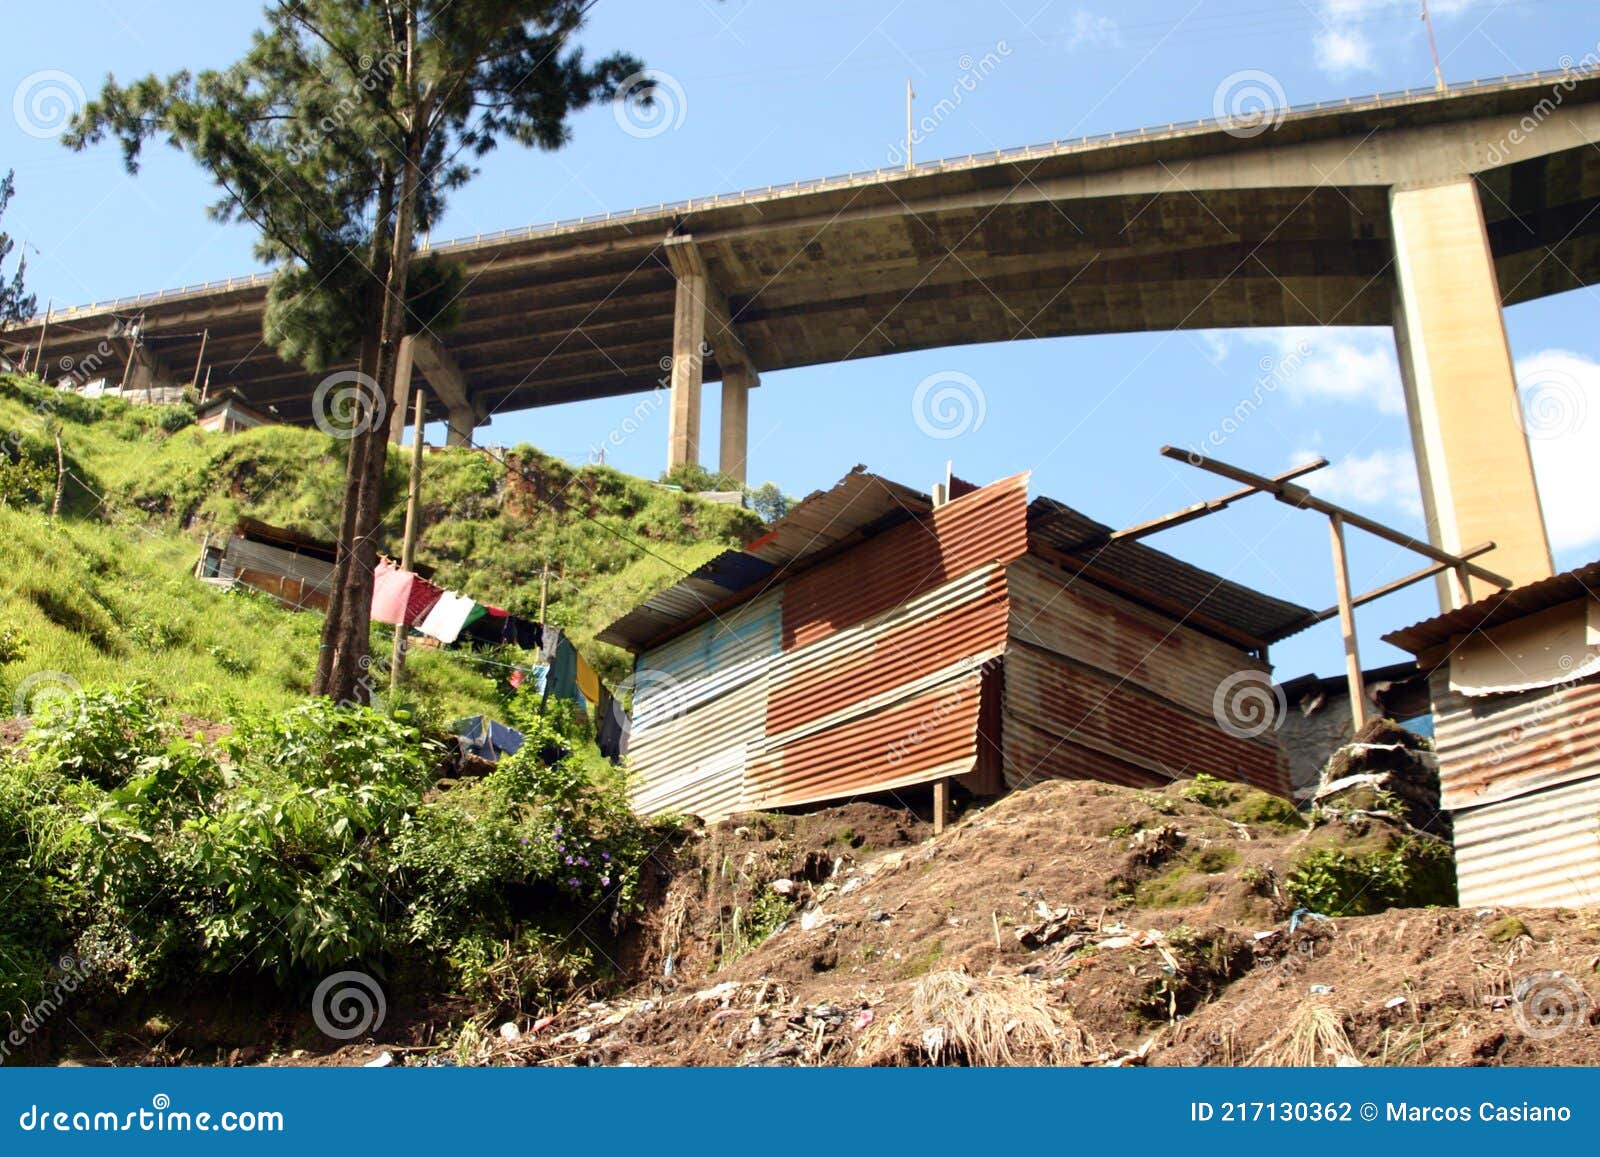 the poor homes near the incienso bridge in guatemala city.